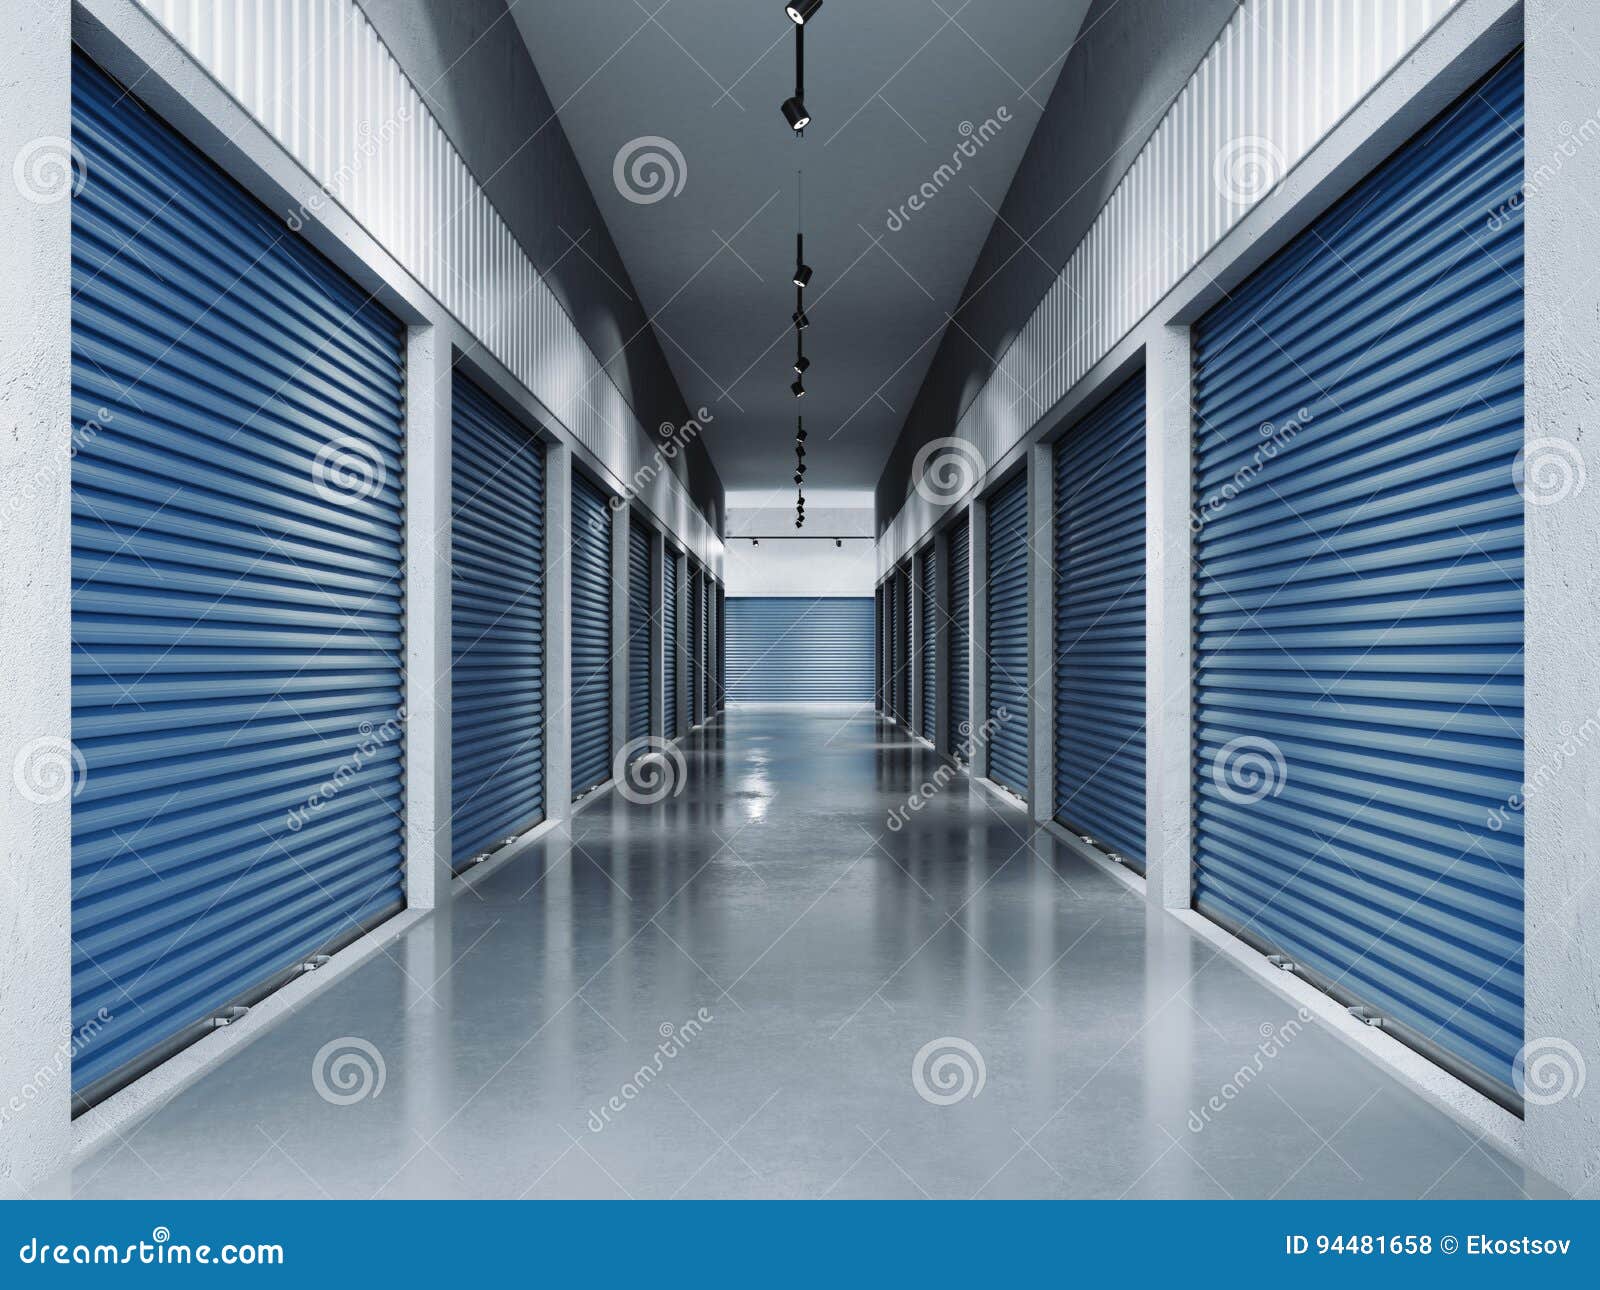 storage facilities with blue doors.3d rendering